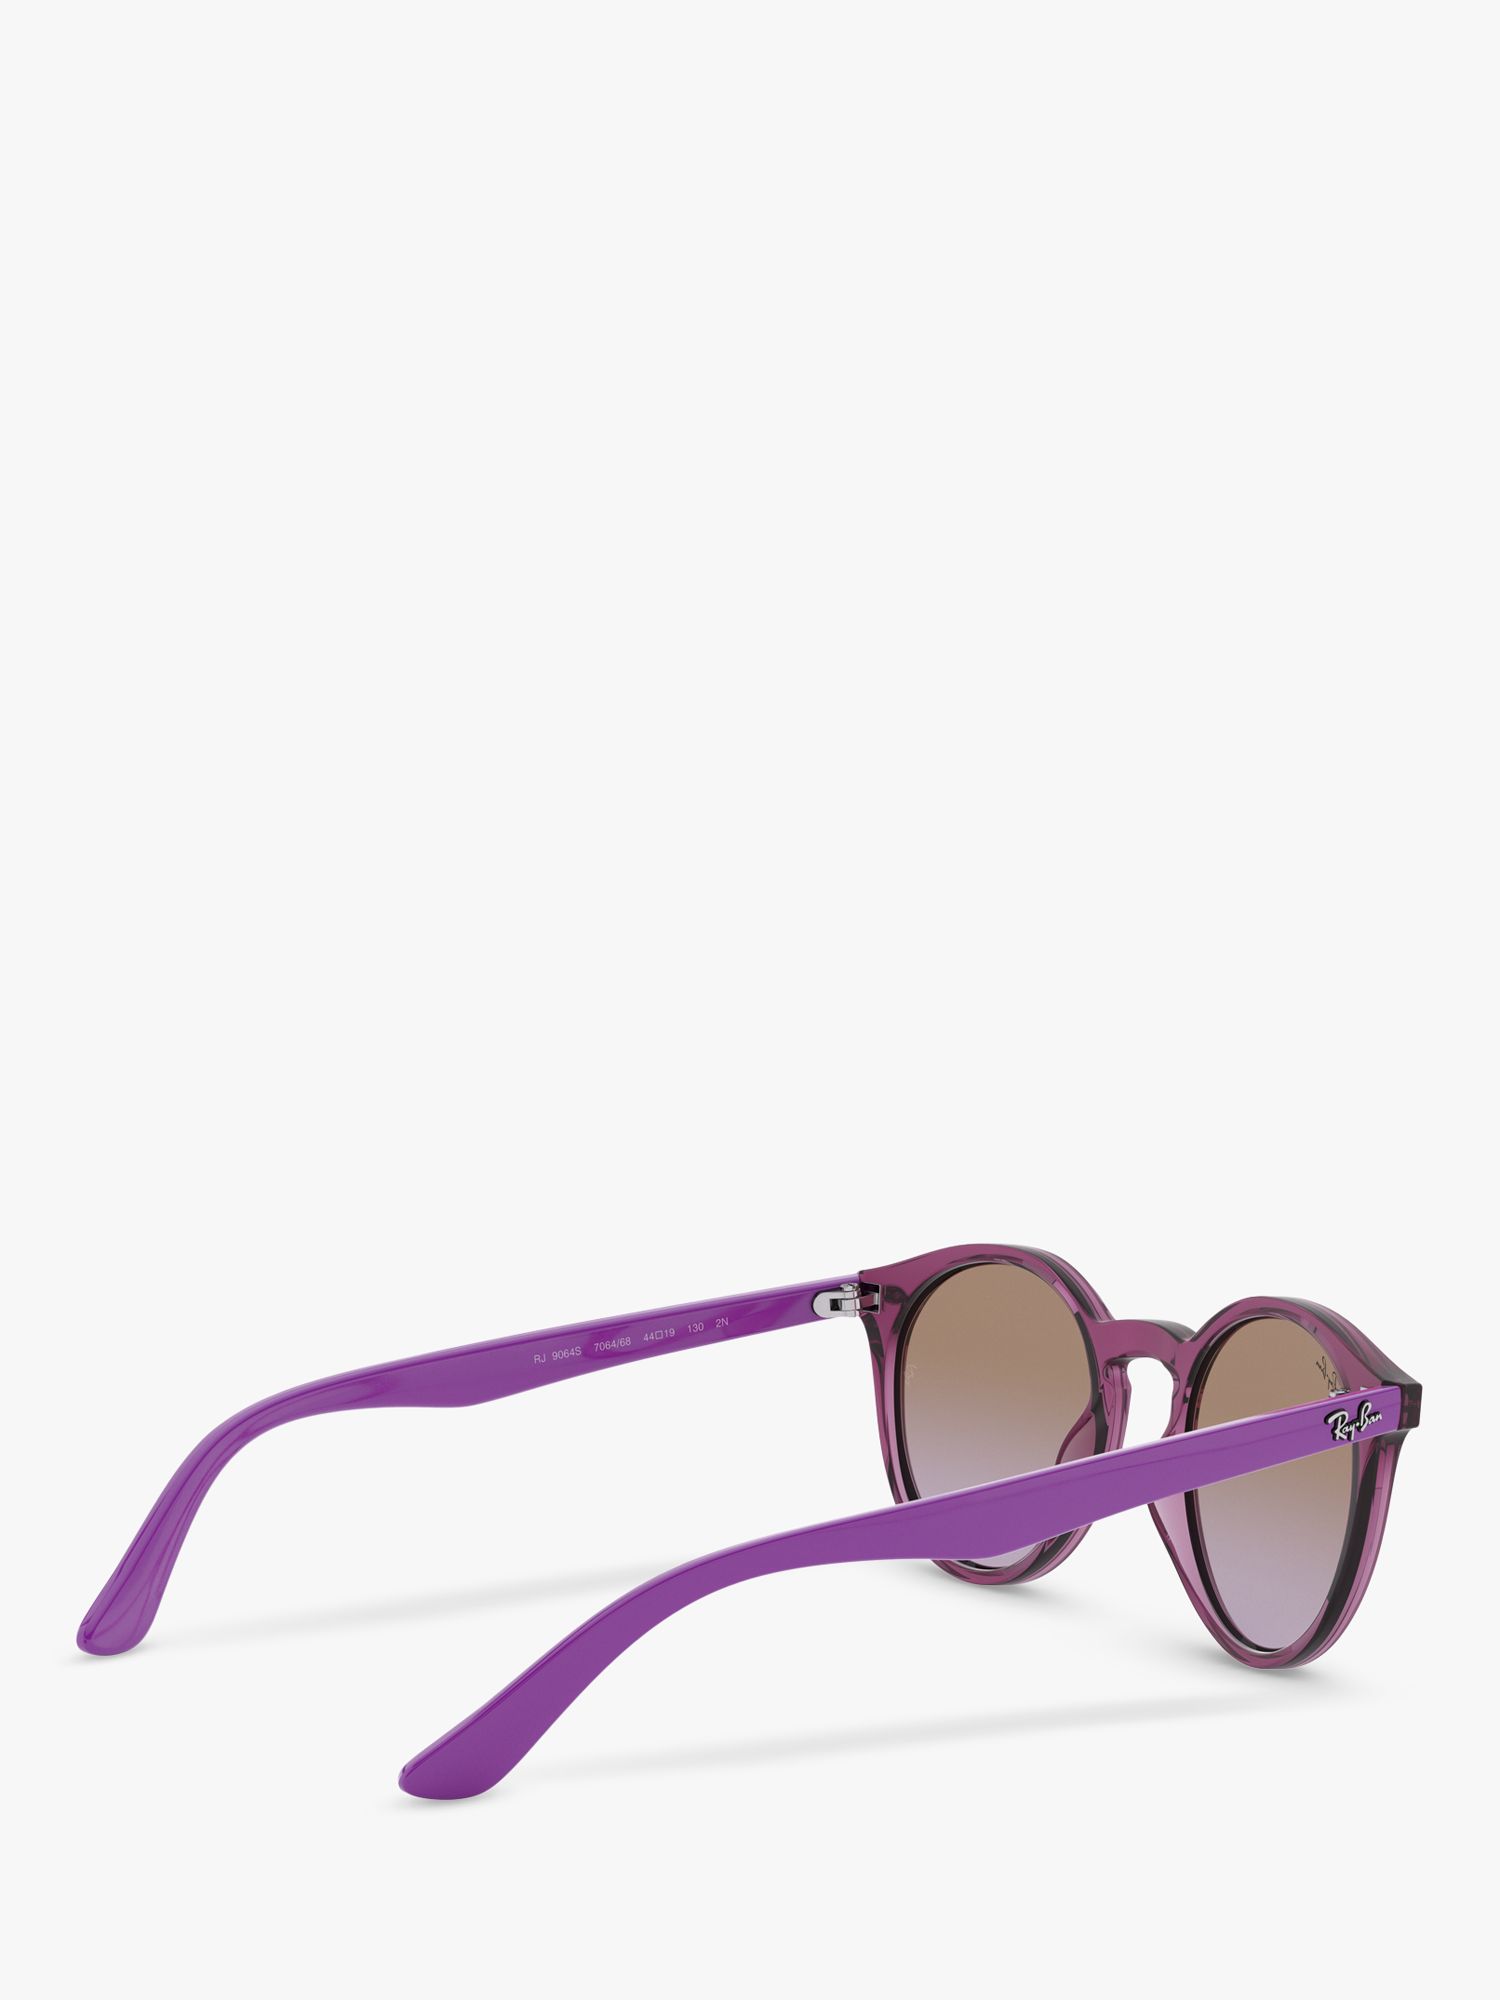 Ray-Ban Junior RJ9064S Round Sunglasses, Purple/Multi Gradient